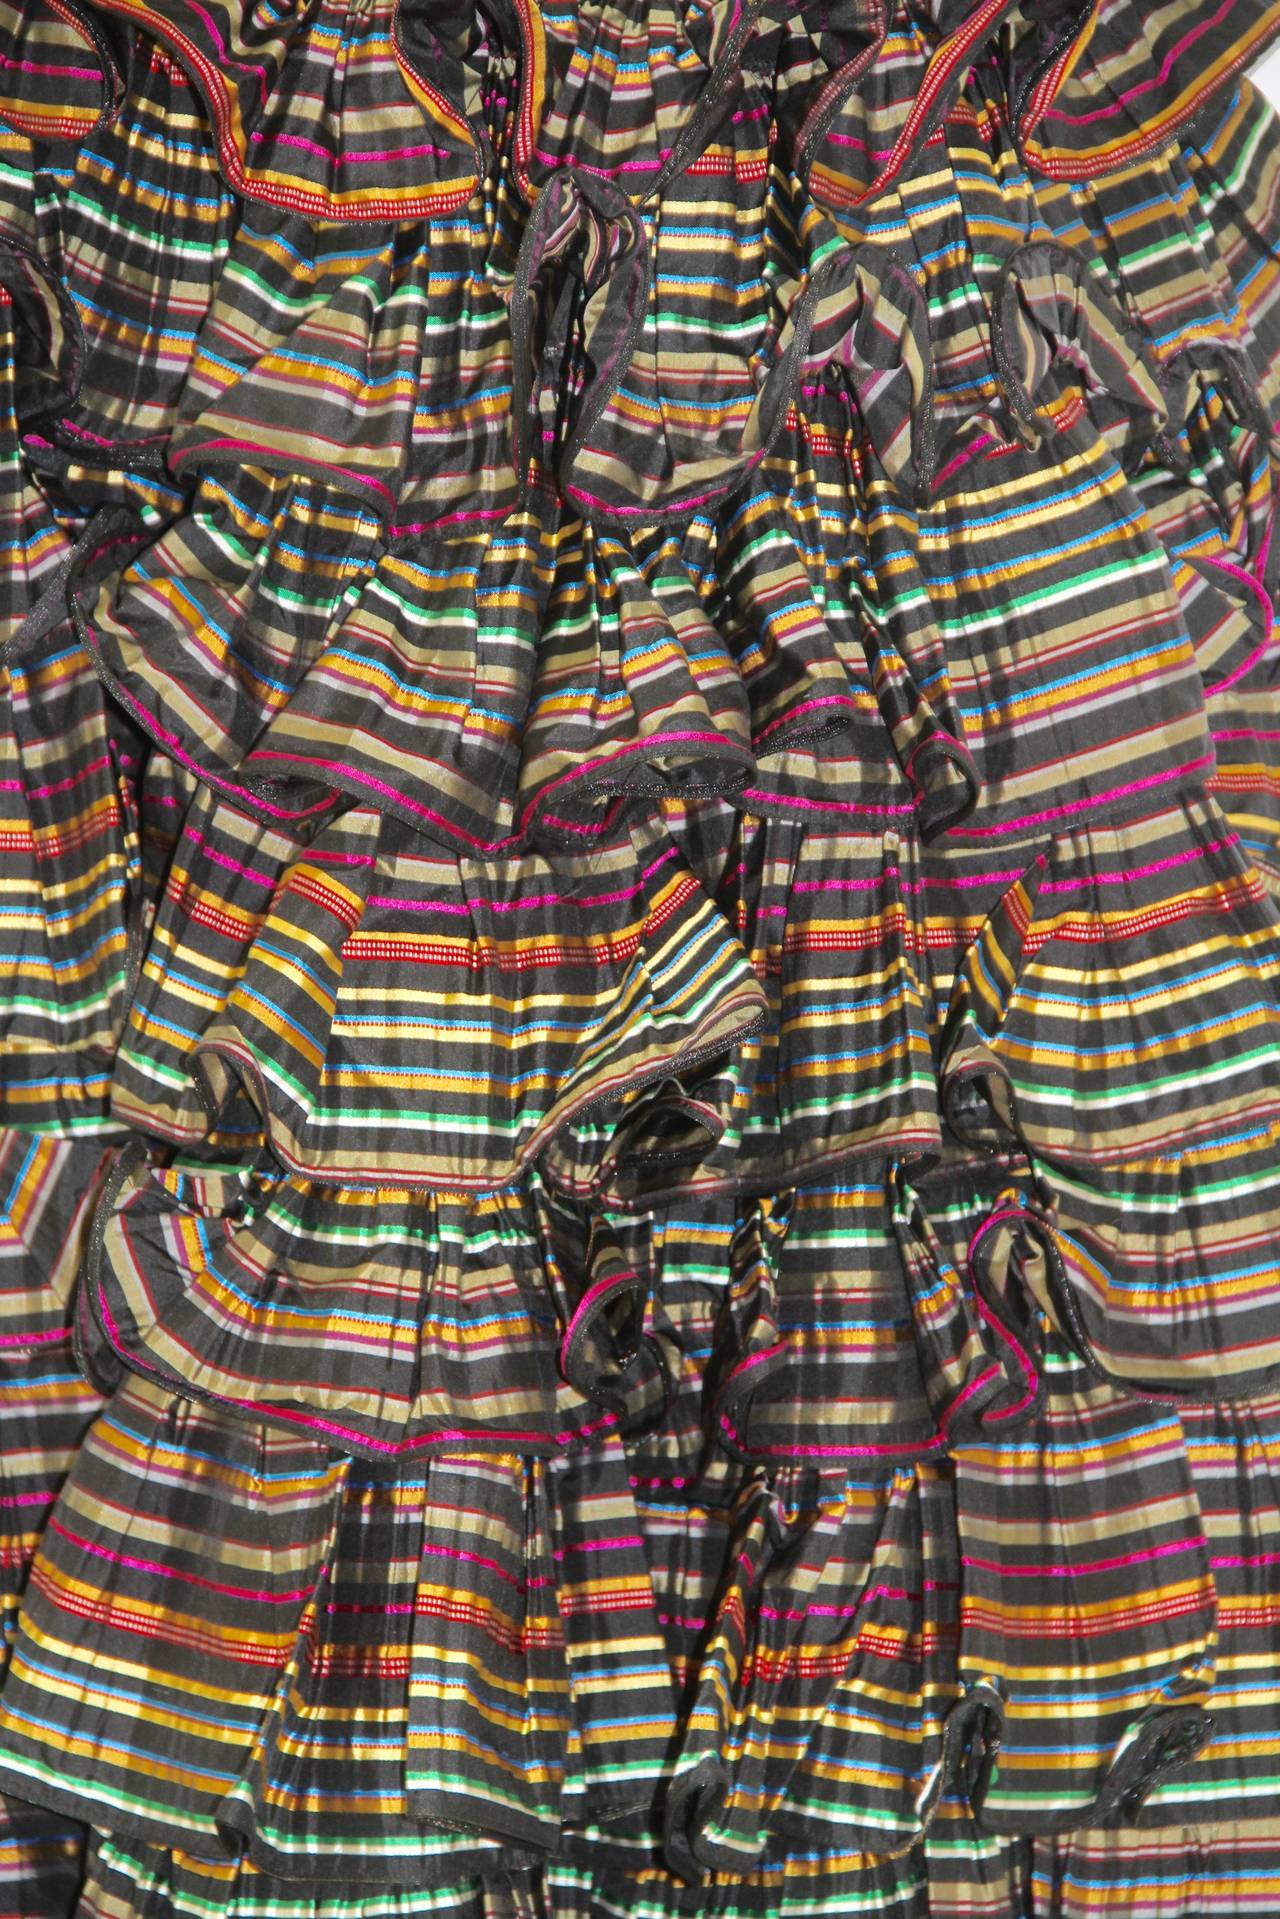 An important Oscar De La Renta 1980's tiered boho gypsy silk printed skirt.

Marked a 6 (US).